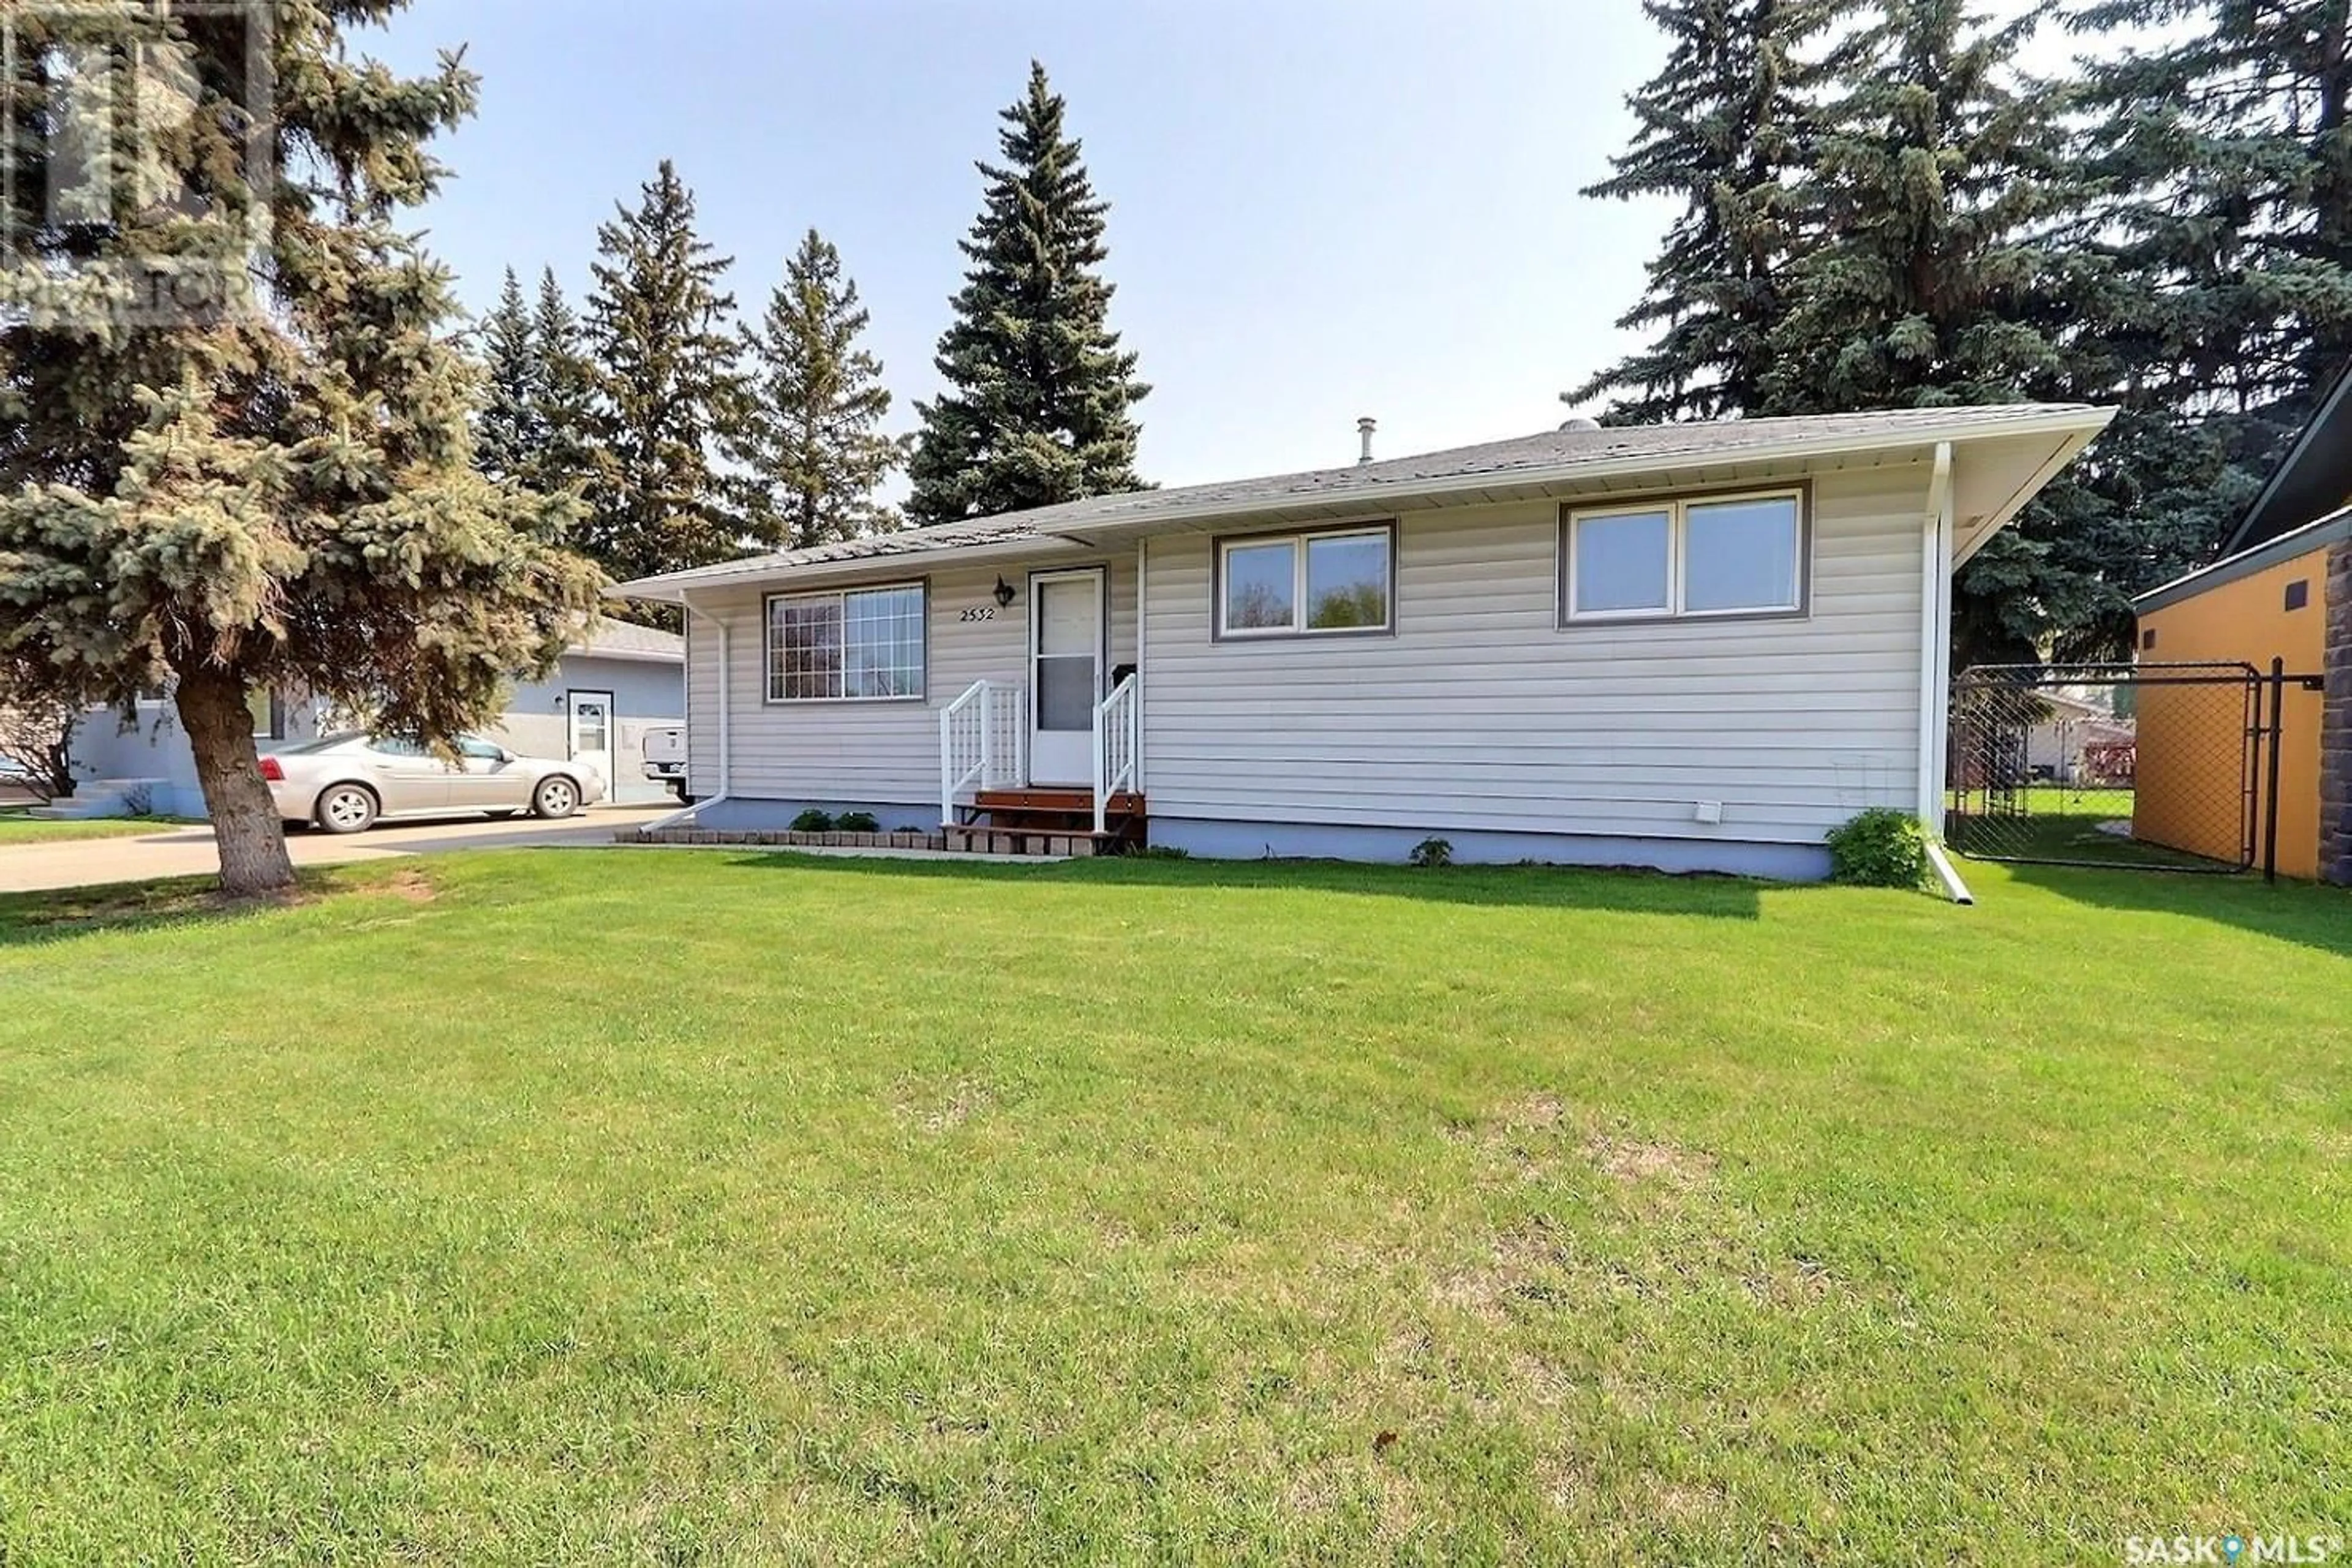 Home with vinyl exterior material for 2532 6th AVENUE E, Prince Albert Saskatchewan S6V2K8